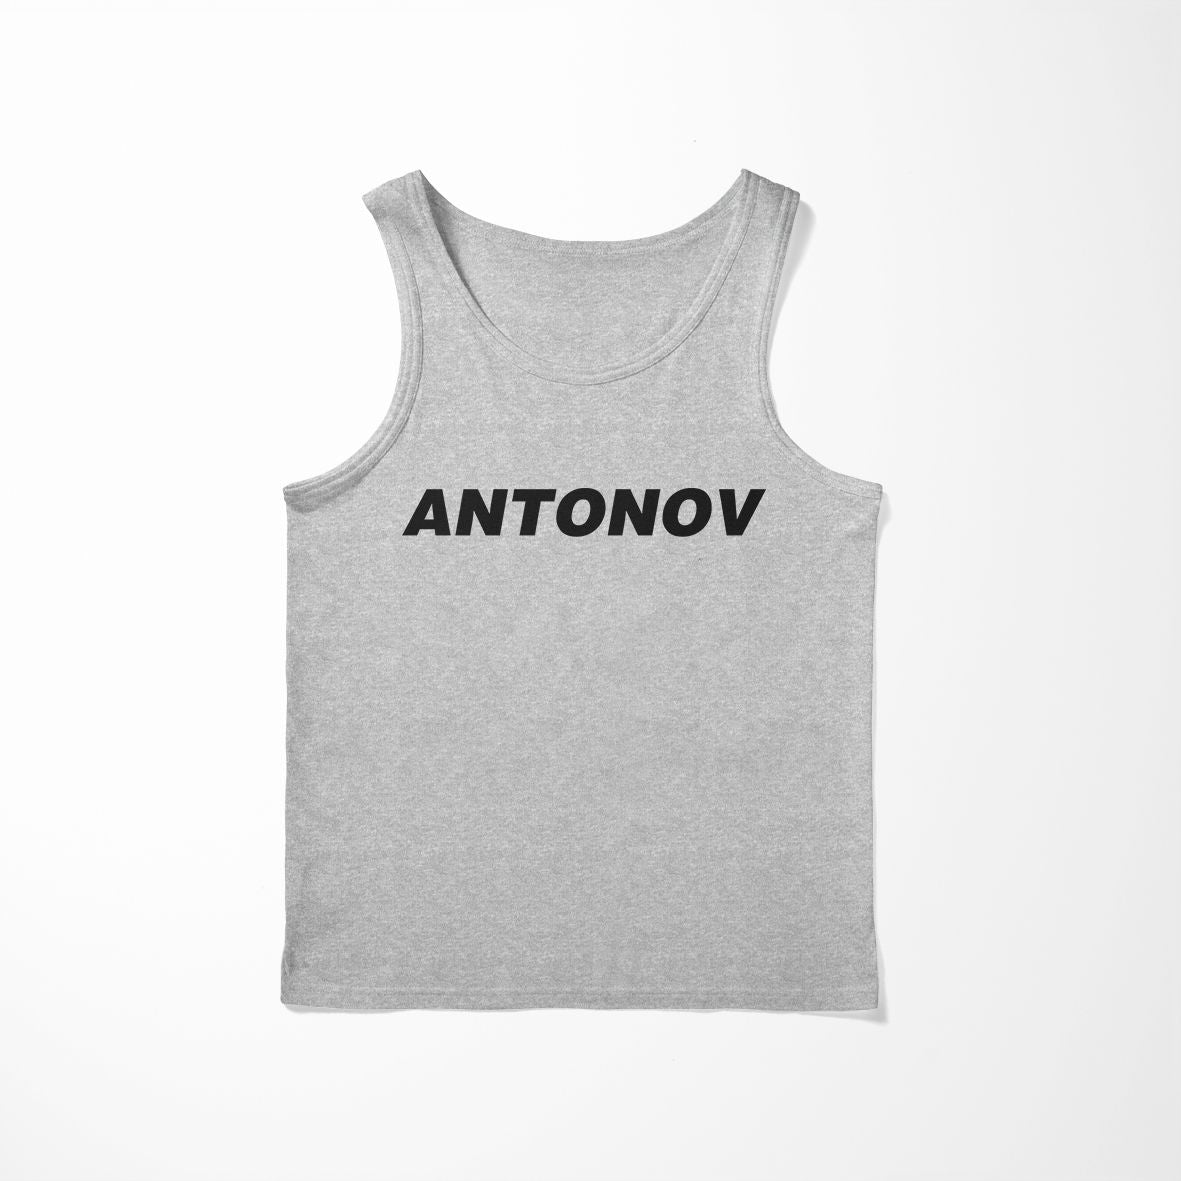 Antonov & Text Designed Tank Top